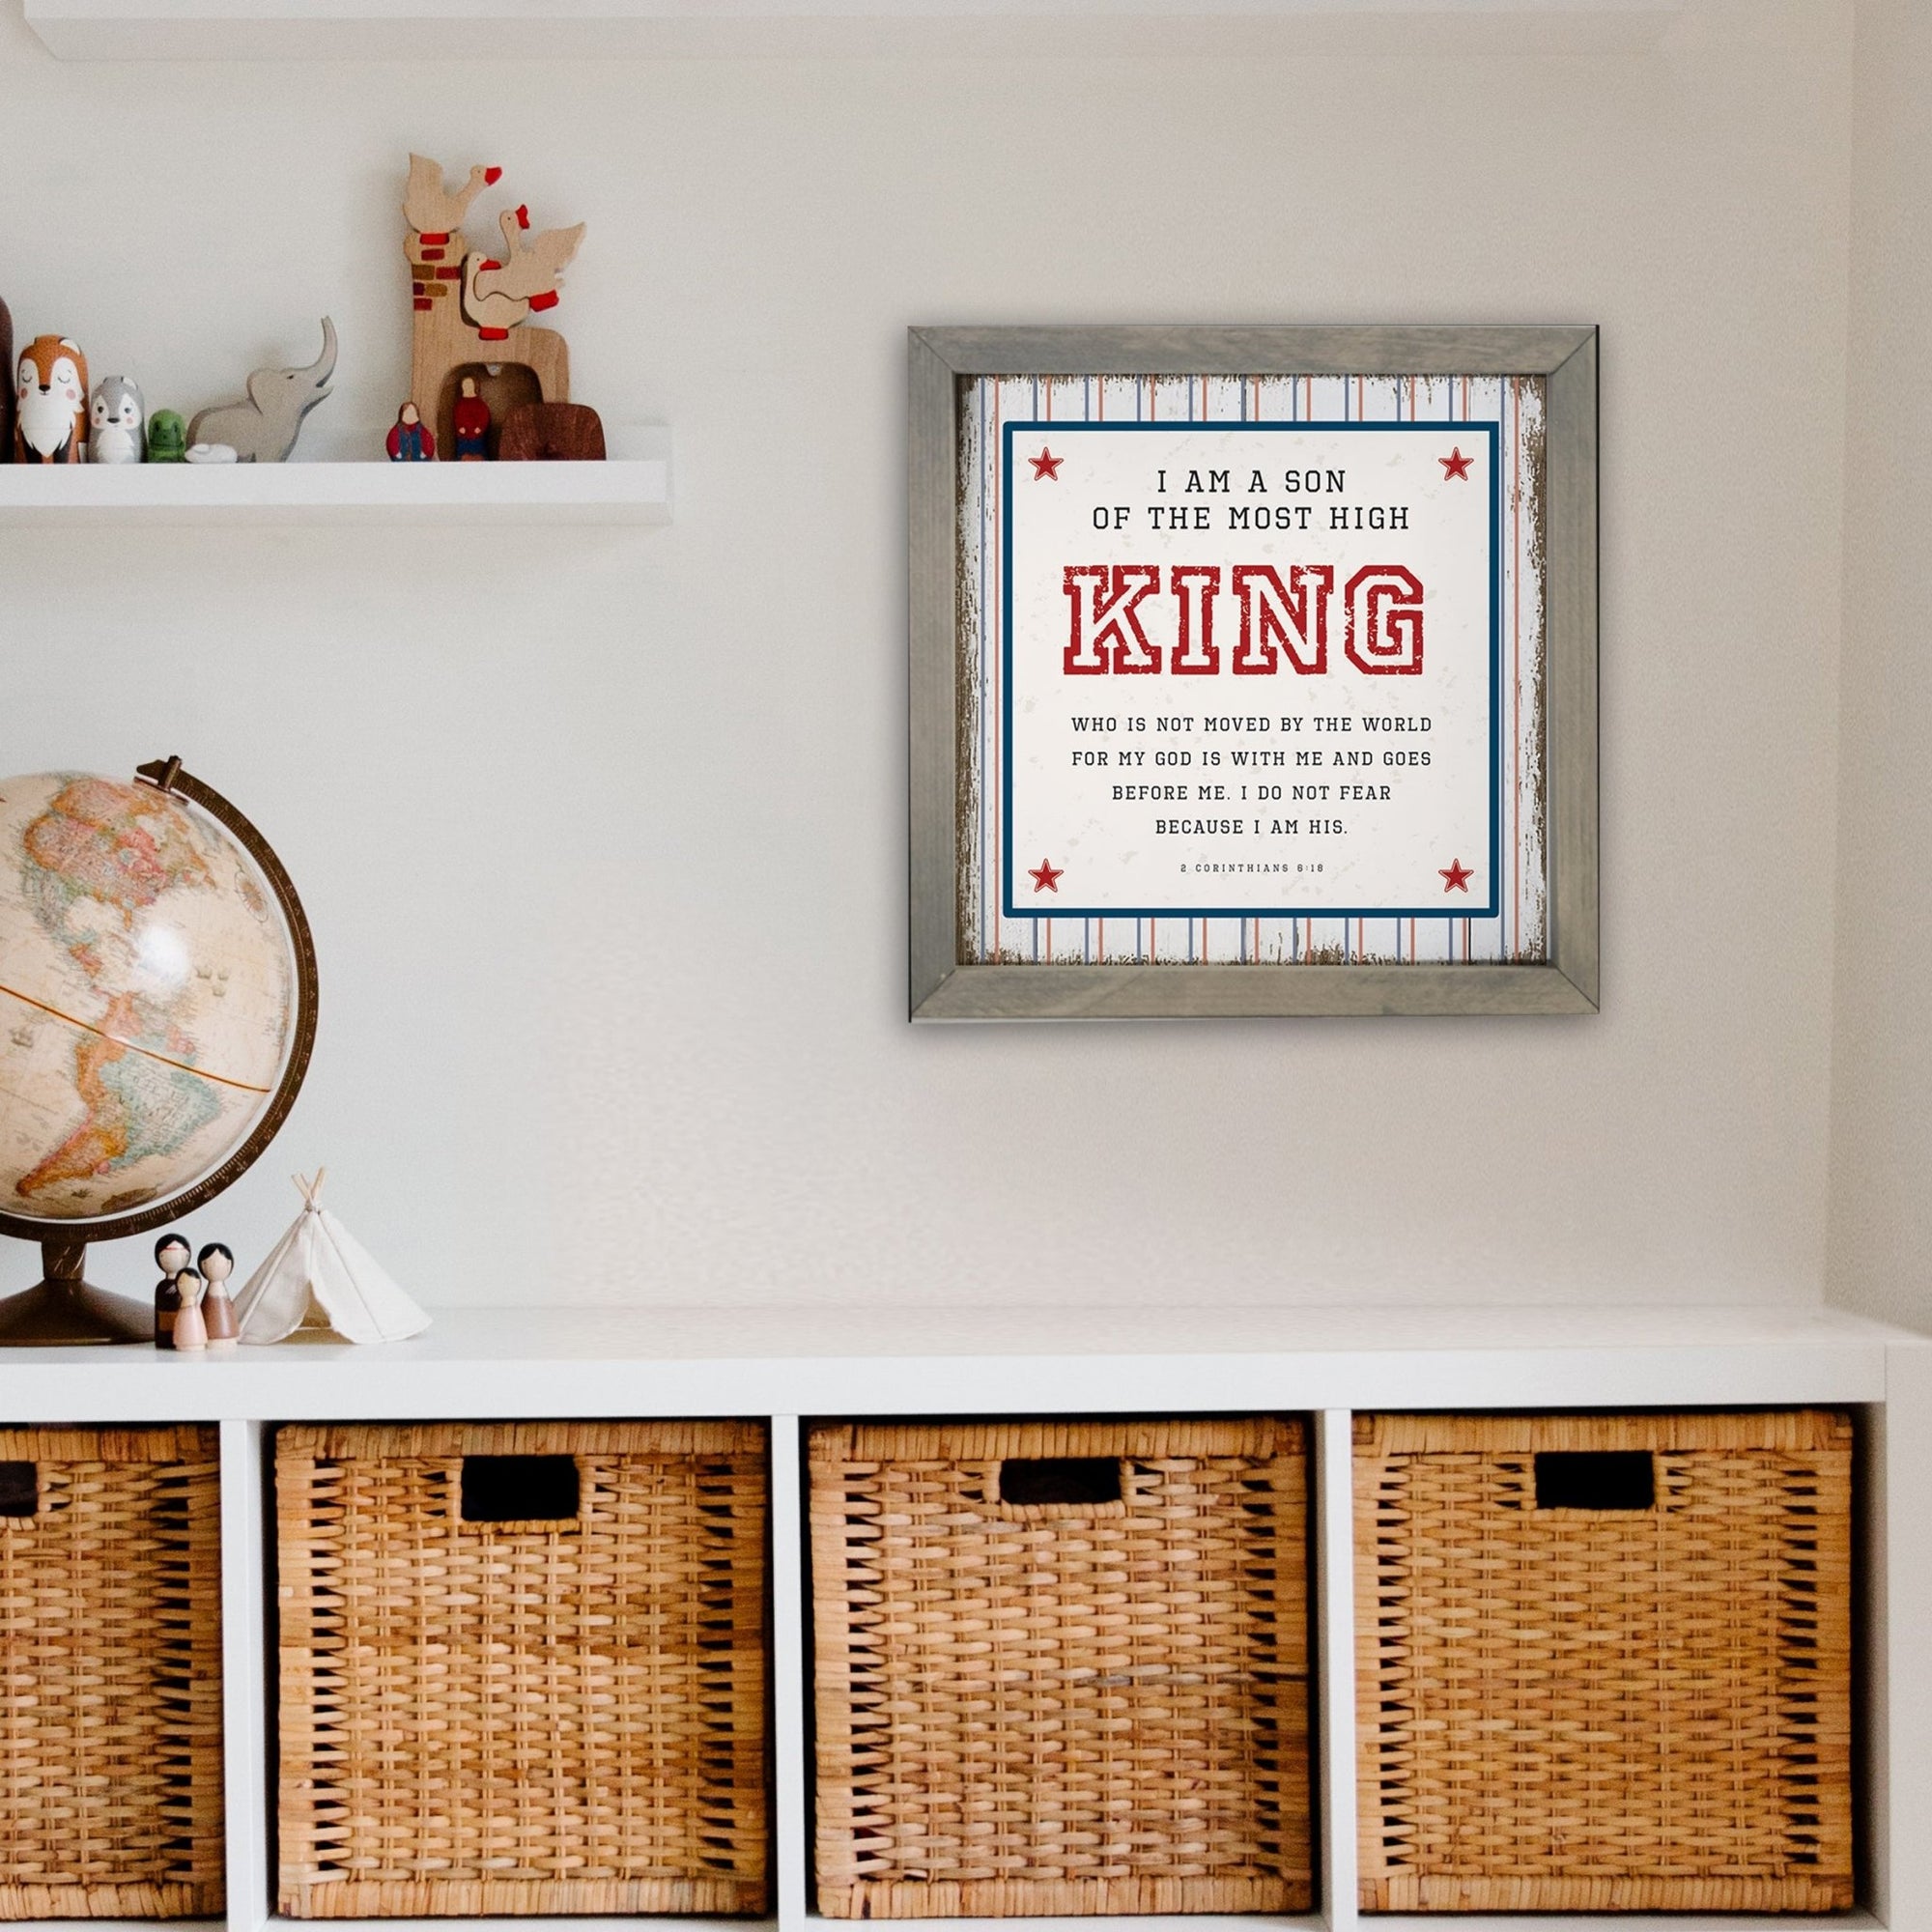 Elegant Baseball Framed Shadow Box Shelf Décor With Inspiring Bible Verses - King - LifeSong Milestones